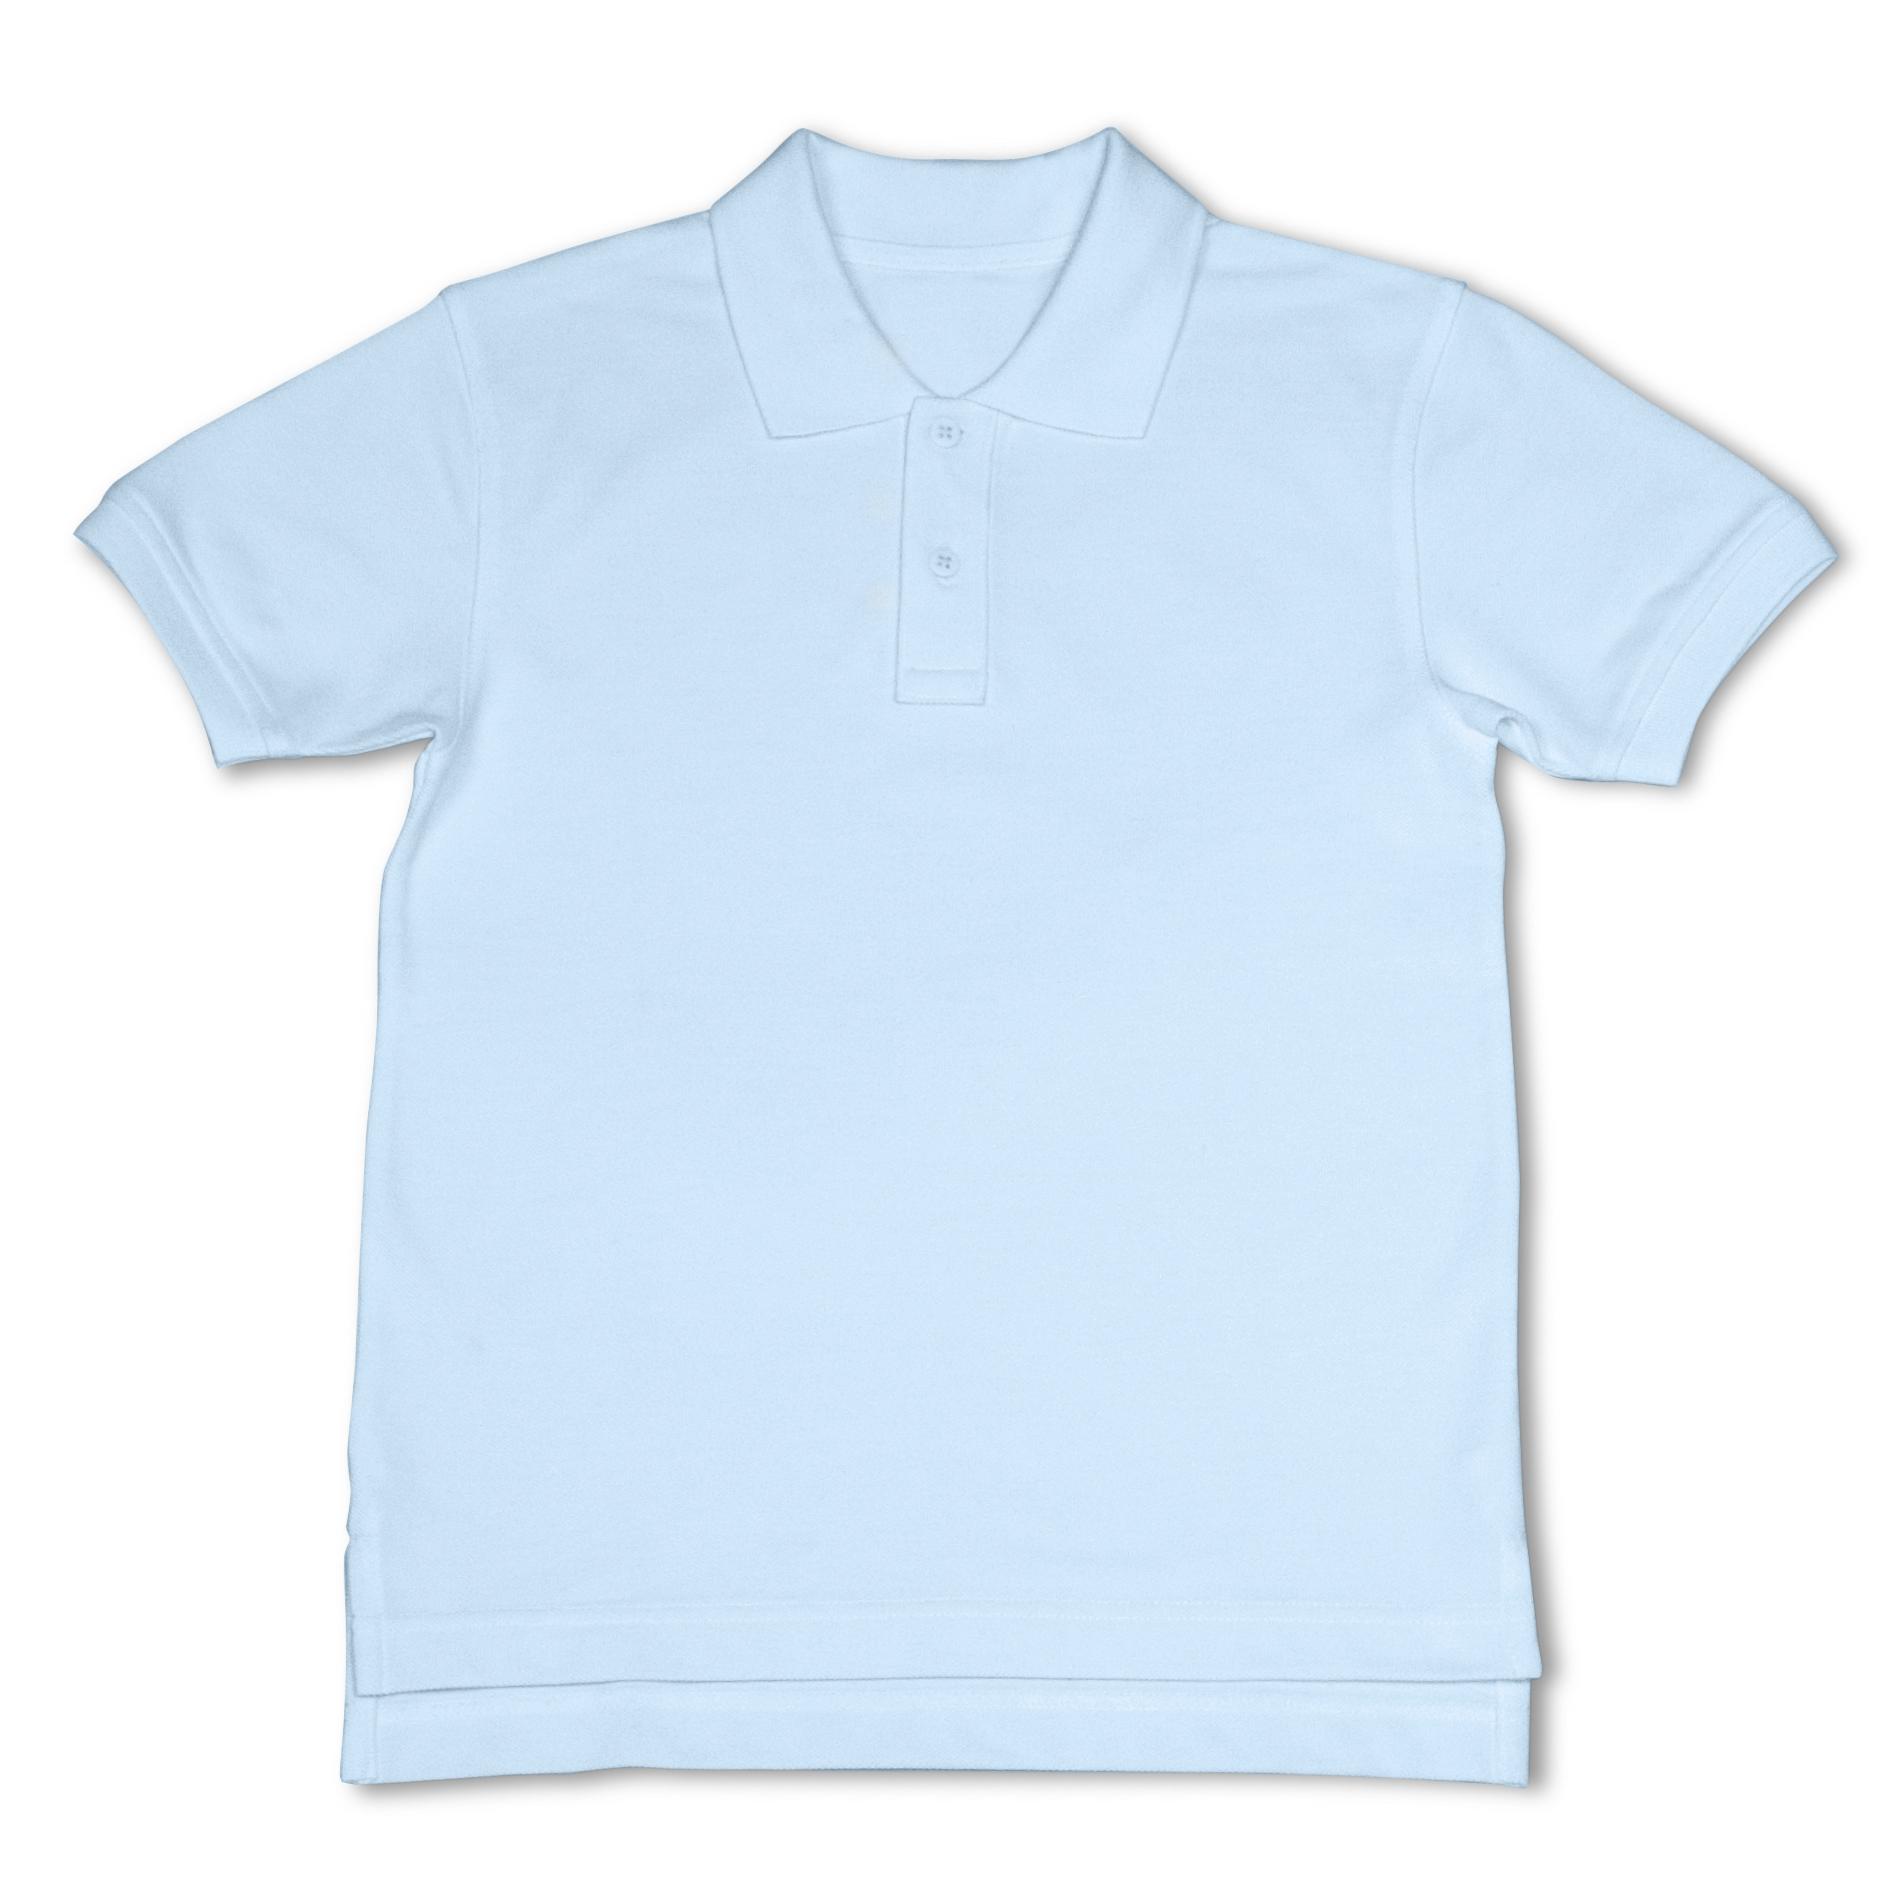 Dockers Boy's Solid Uniform Polo Shirt - Light Blue